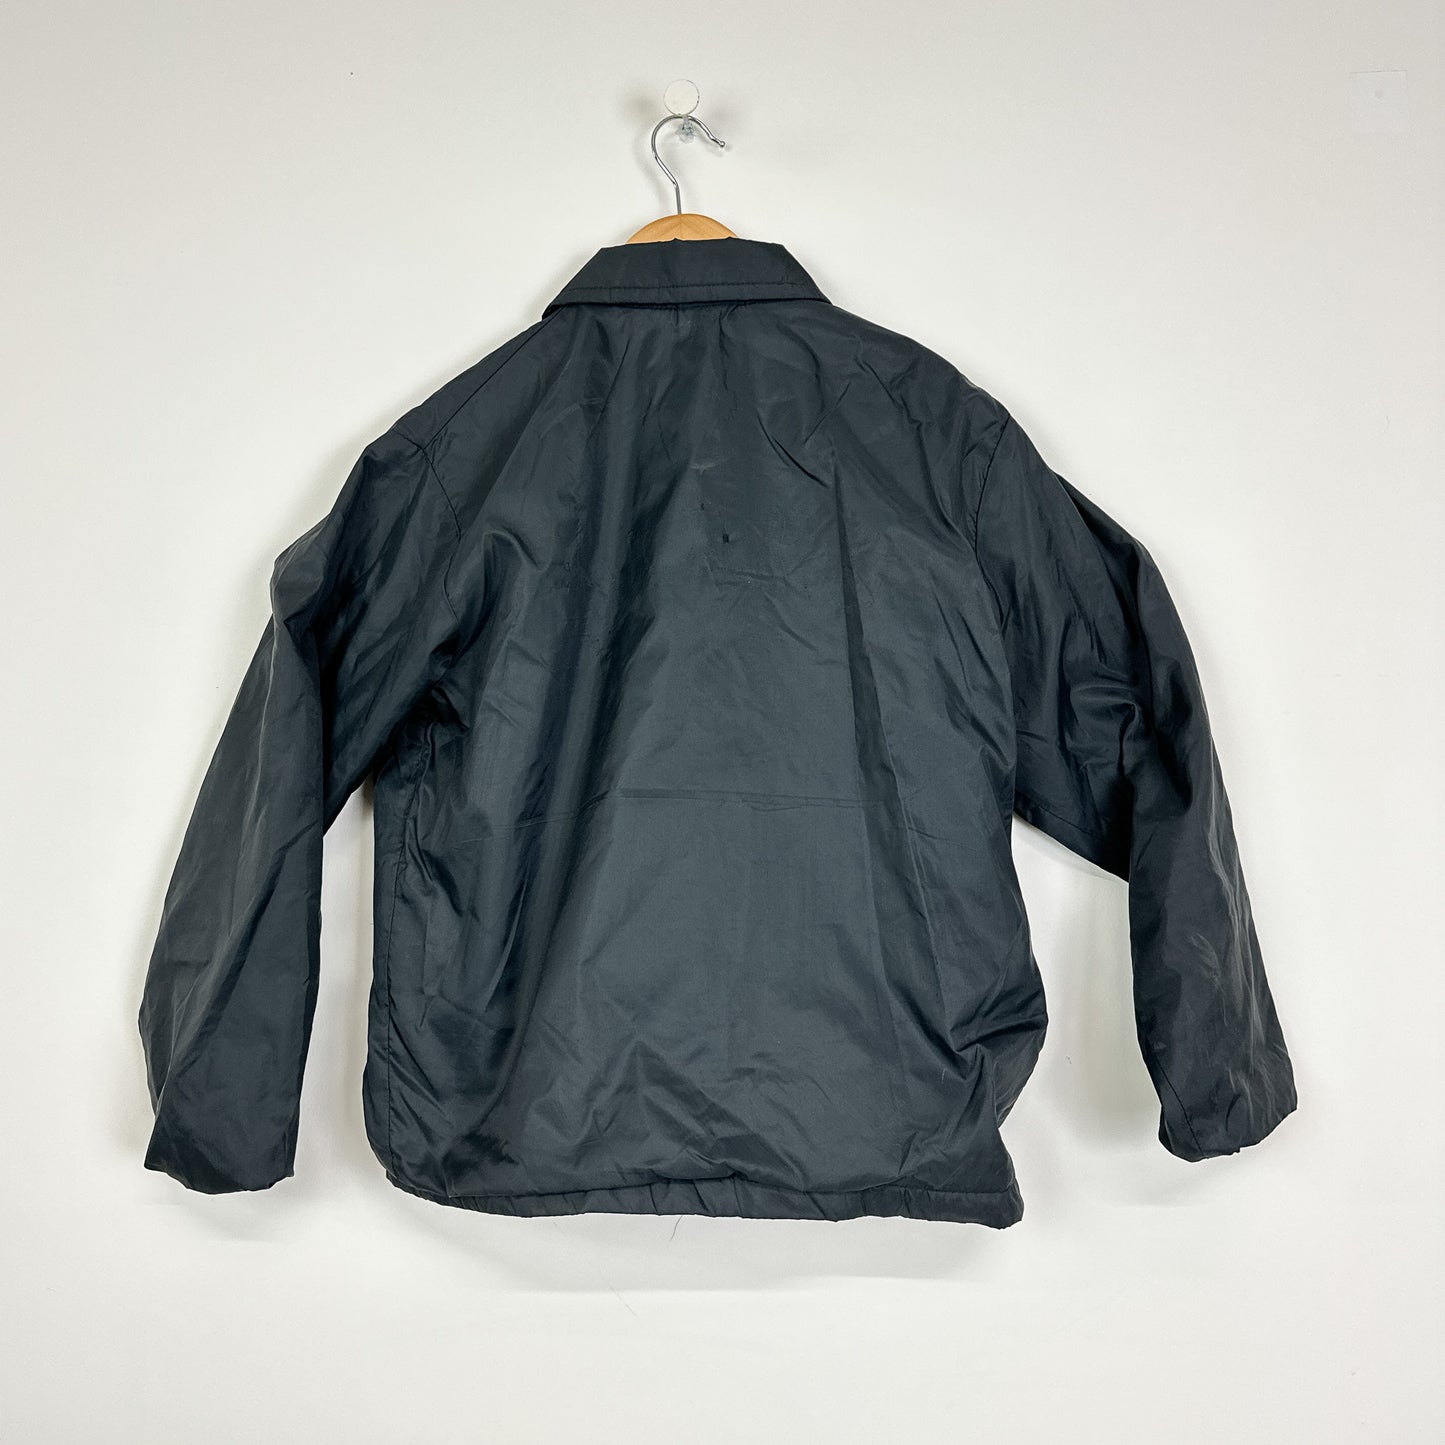 Vintage Nick Coaches Jacket - Size 10-12